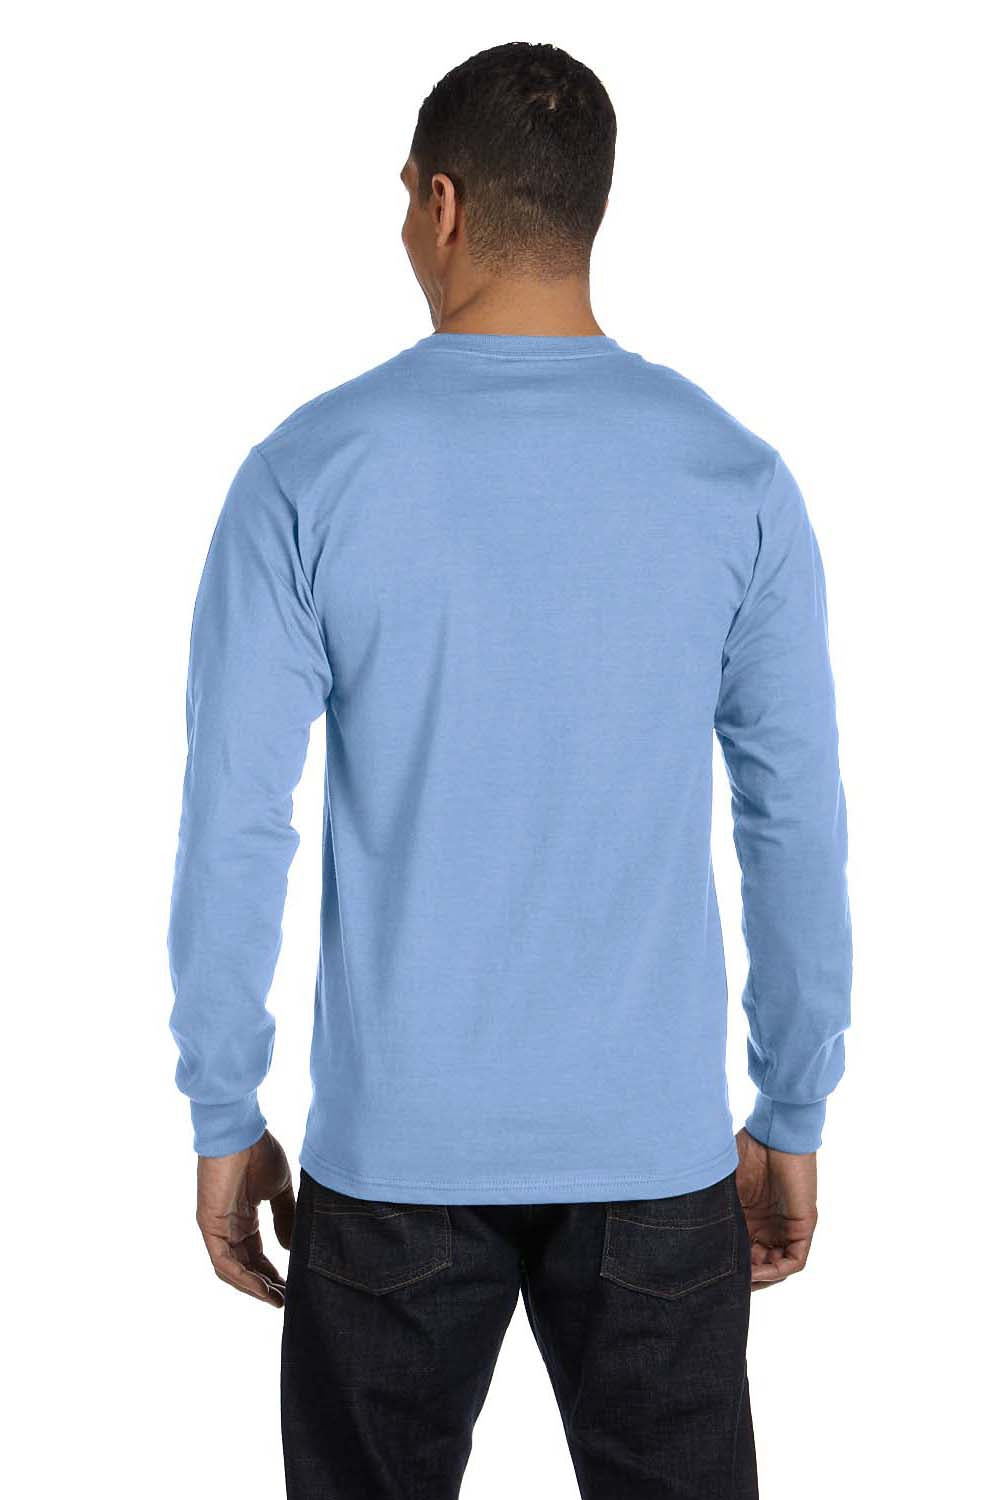 Hanes 5186 Mens Beefy-T Long Sleeve Crewneck T-Shirt Light Blue Back